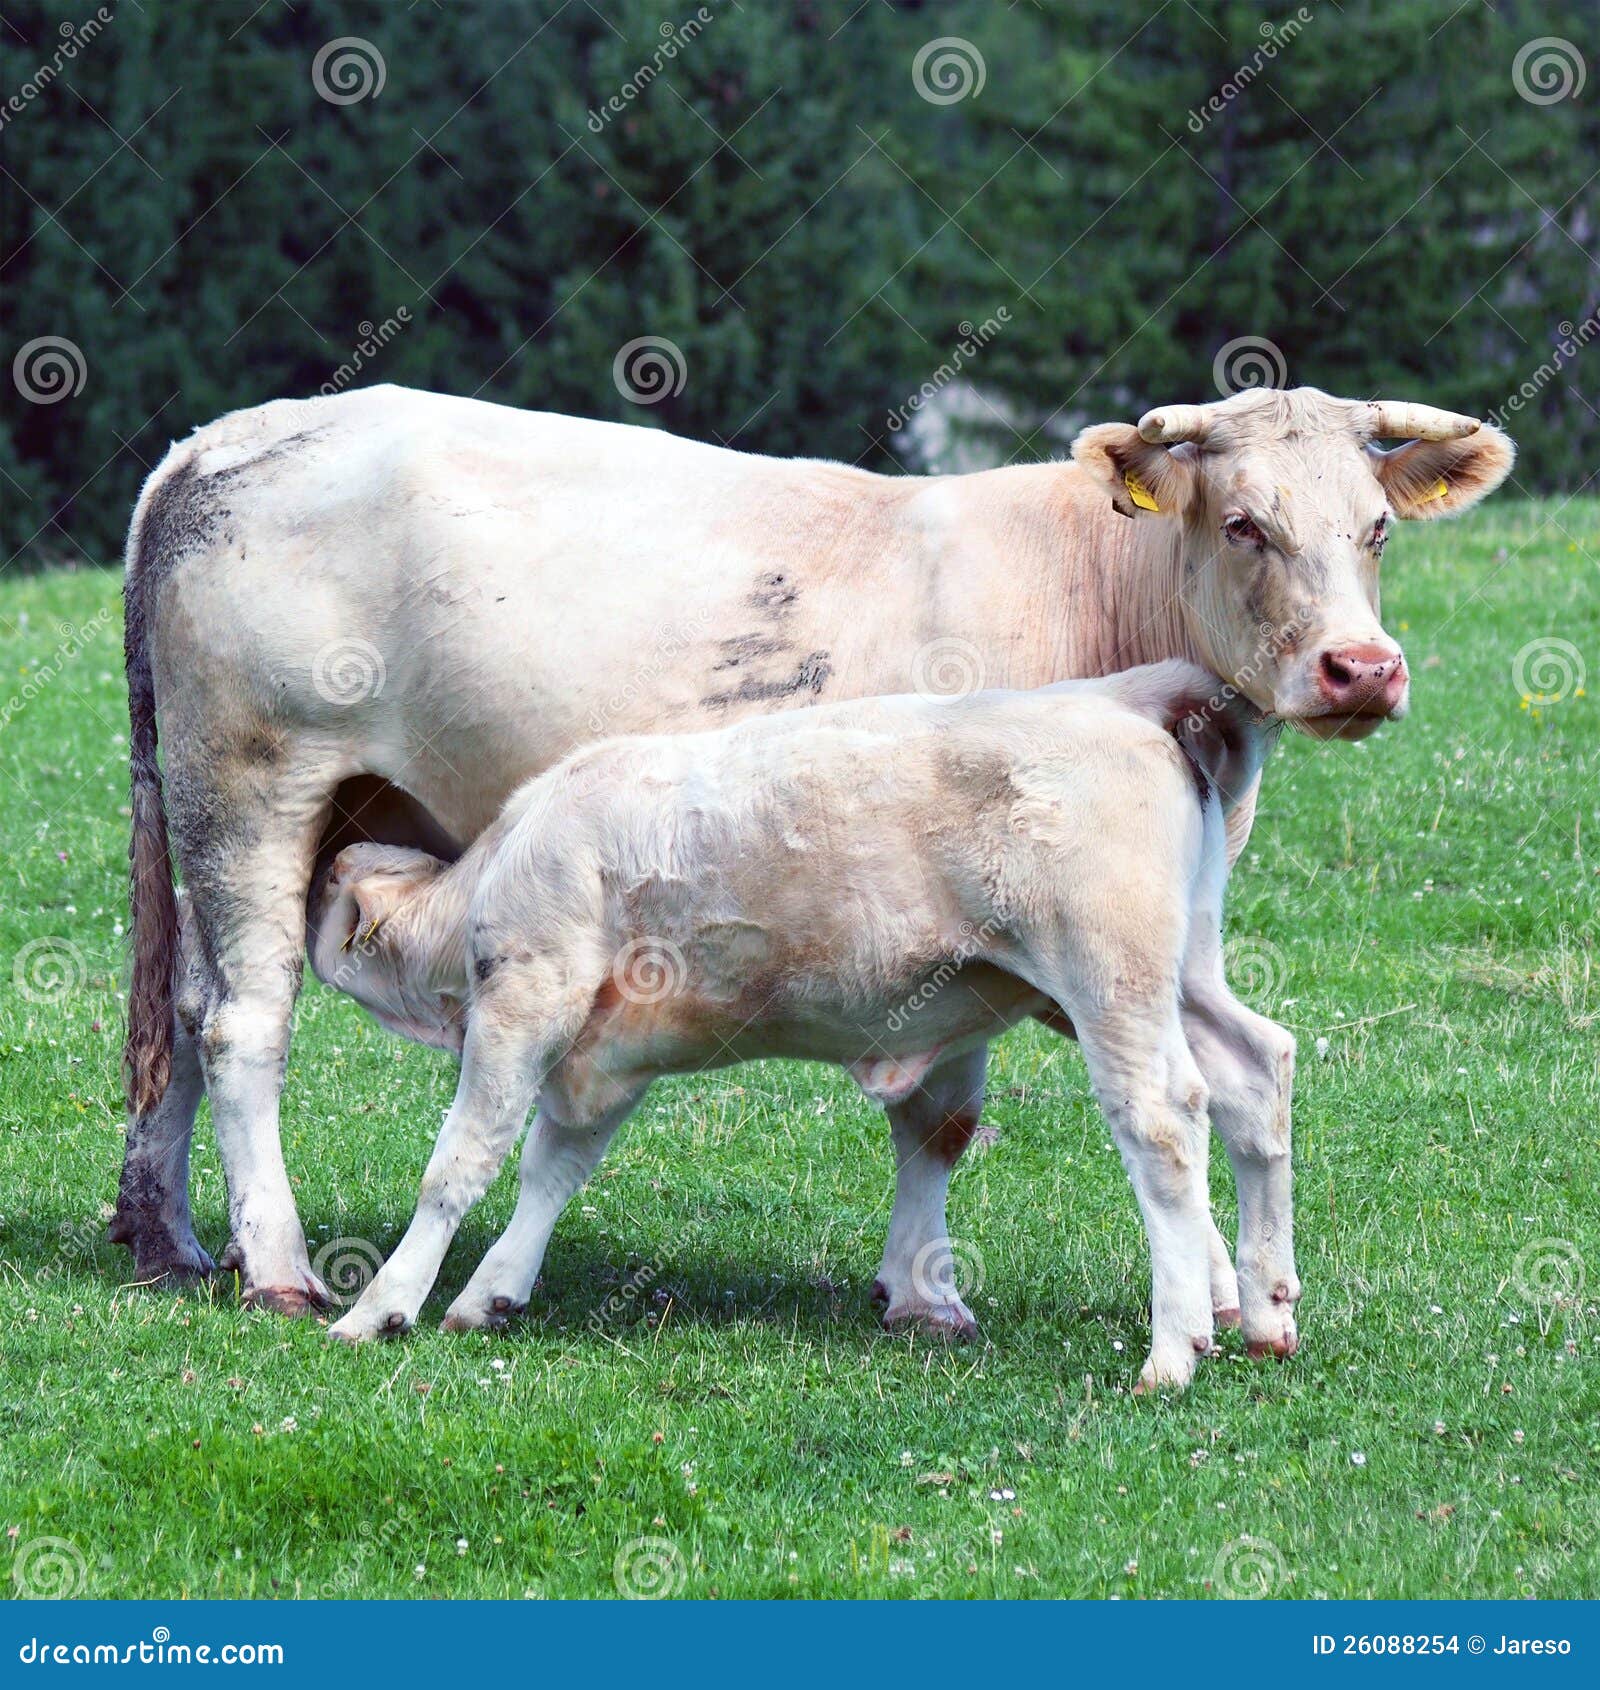 https://thumbs.dreamstime.com/z/calf-feeding-cow-26088254.jpg